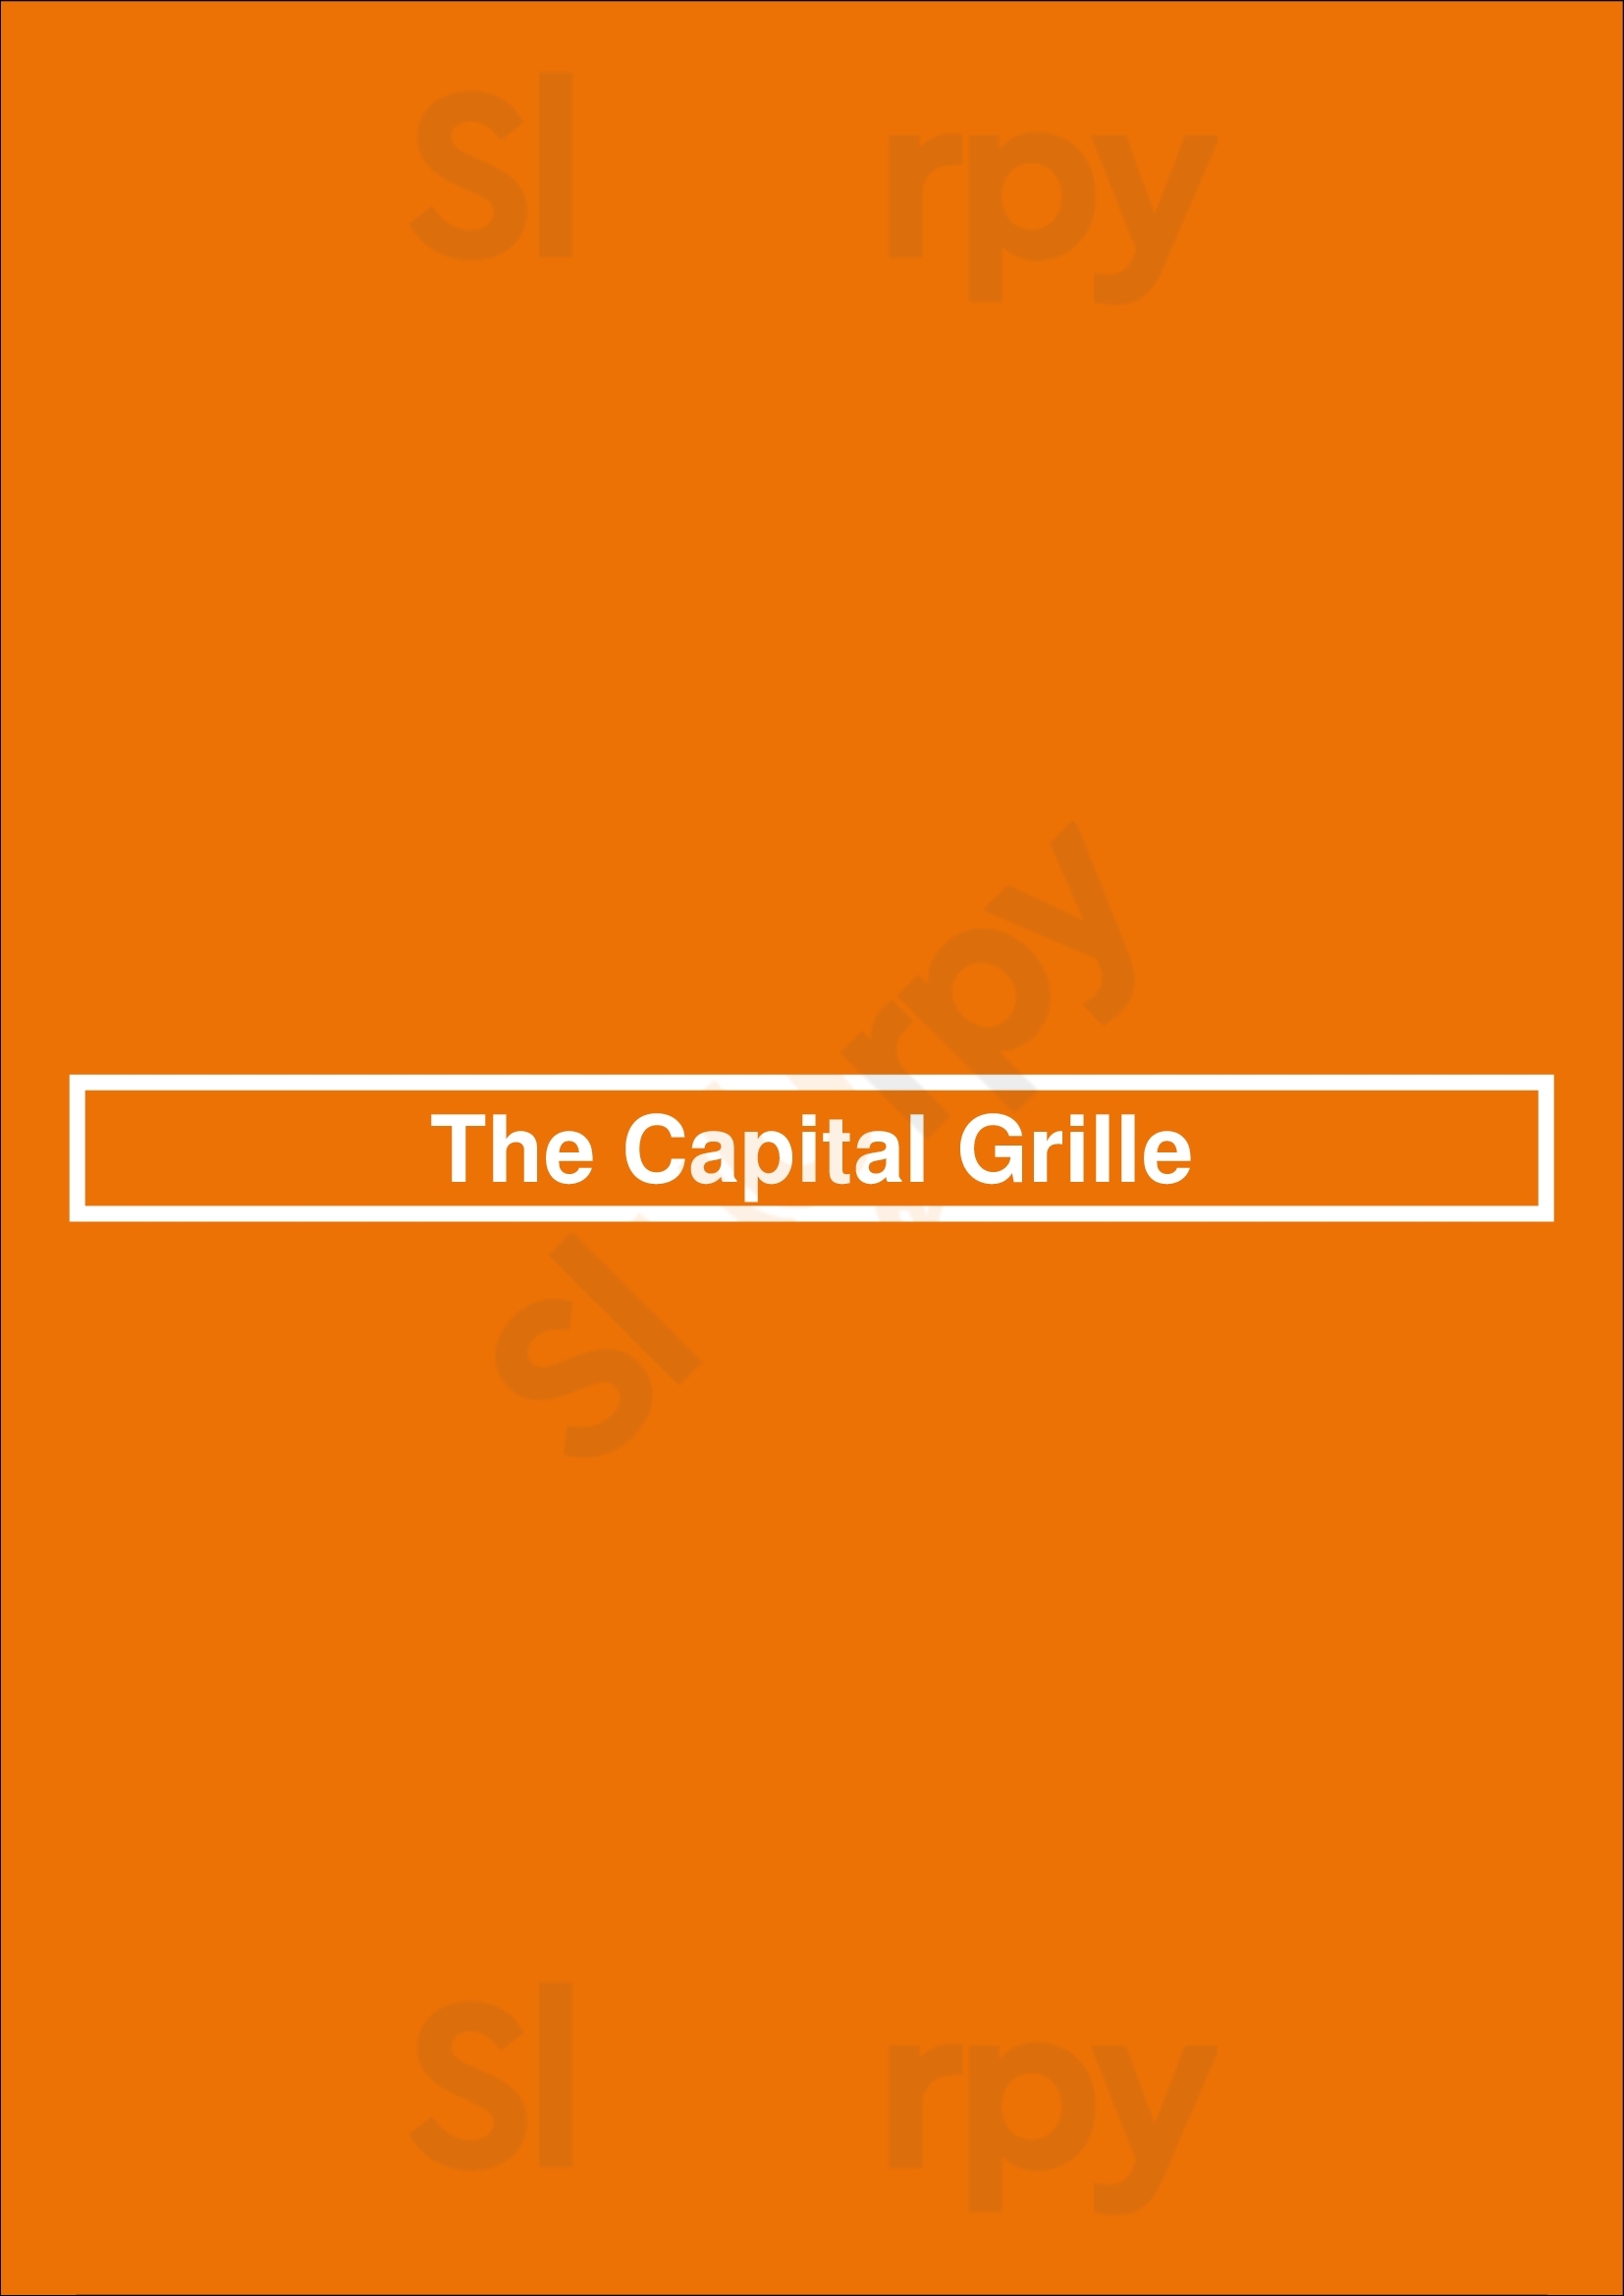 The Capital Grille Kansas City Menu - 1